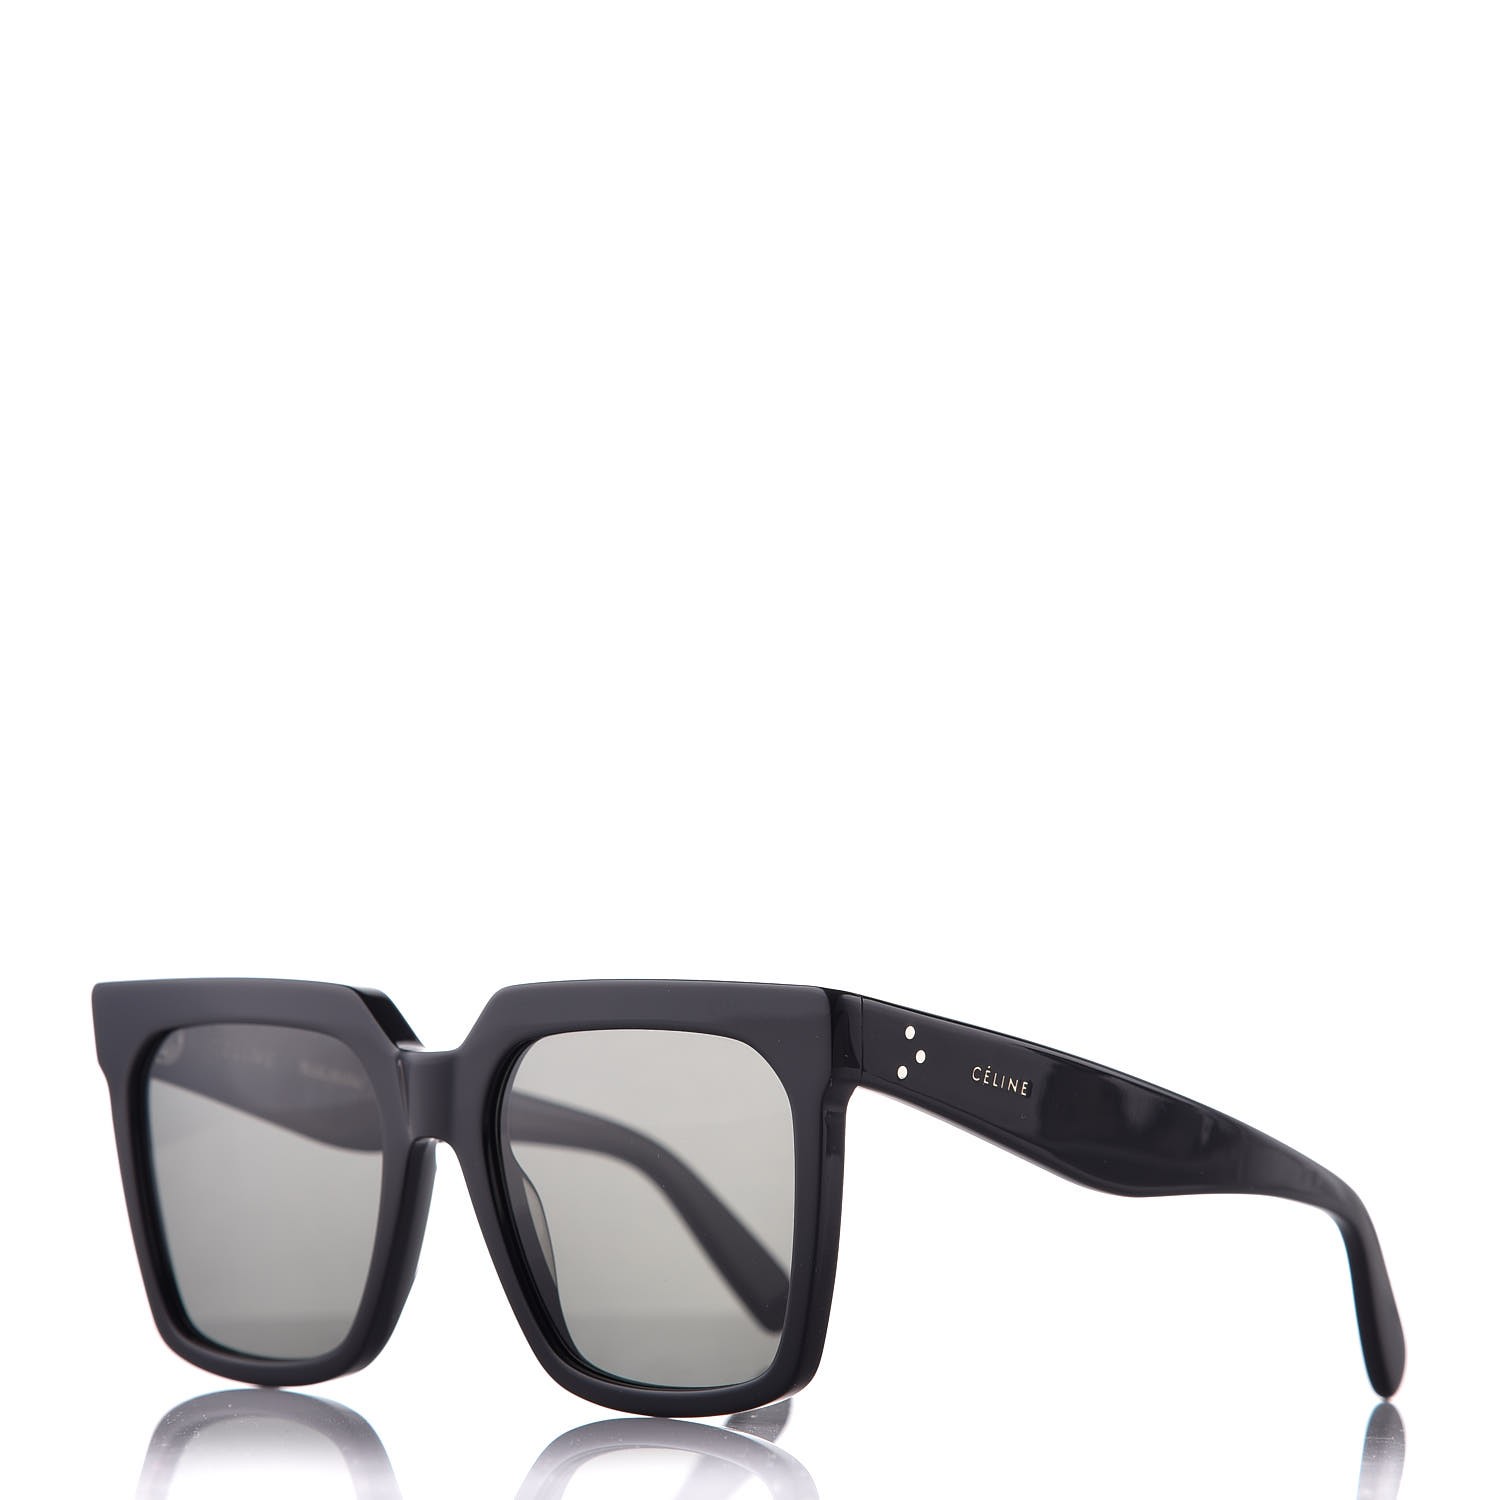 celine black oversized sunglasses